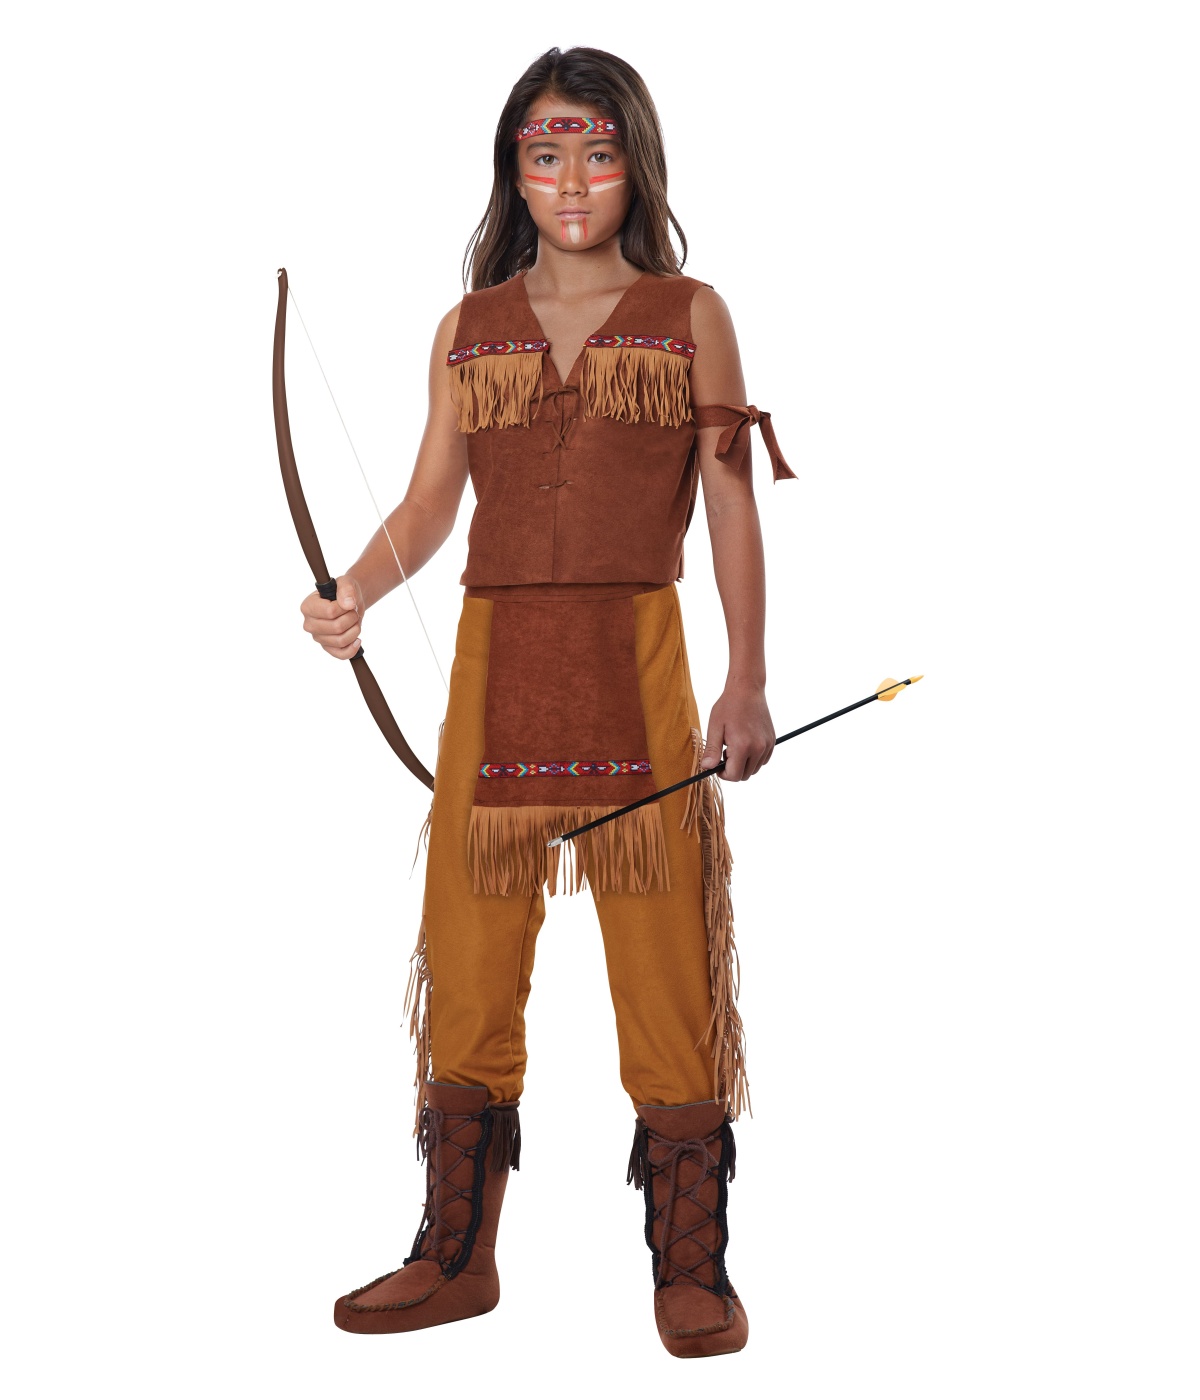  Boys Native American Costume